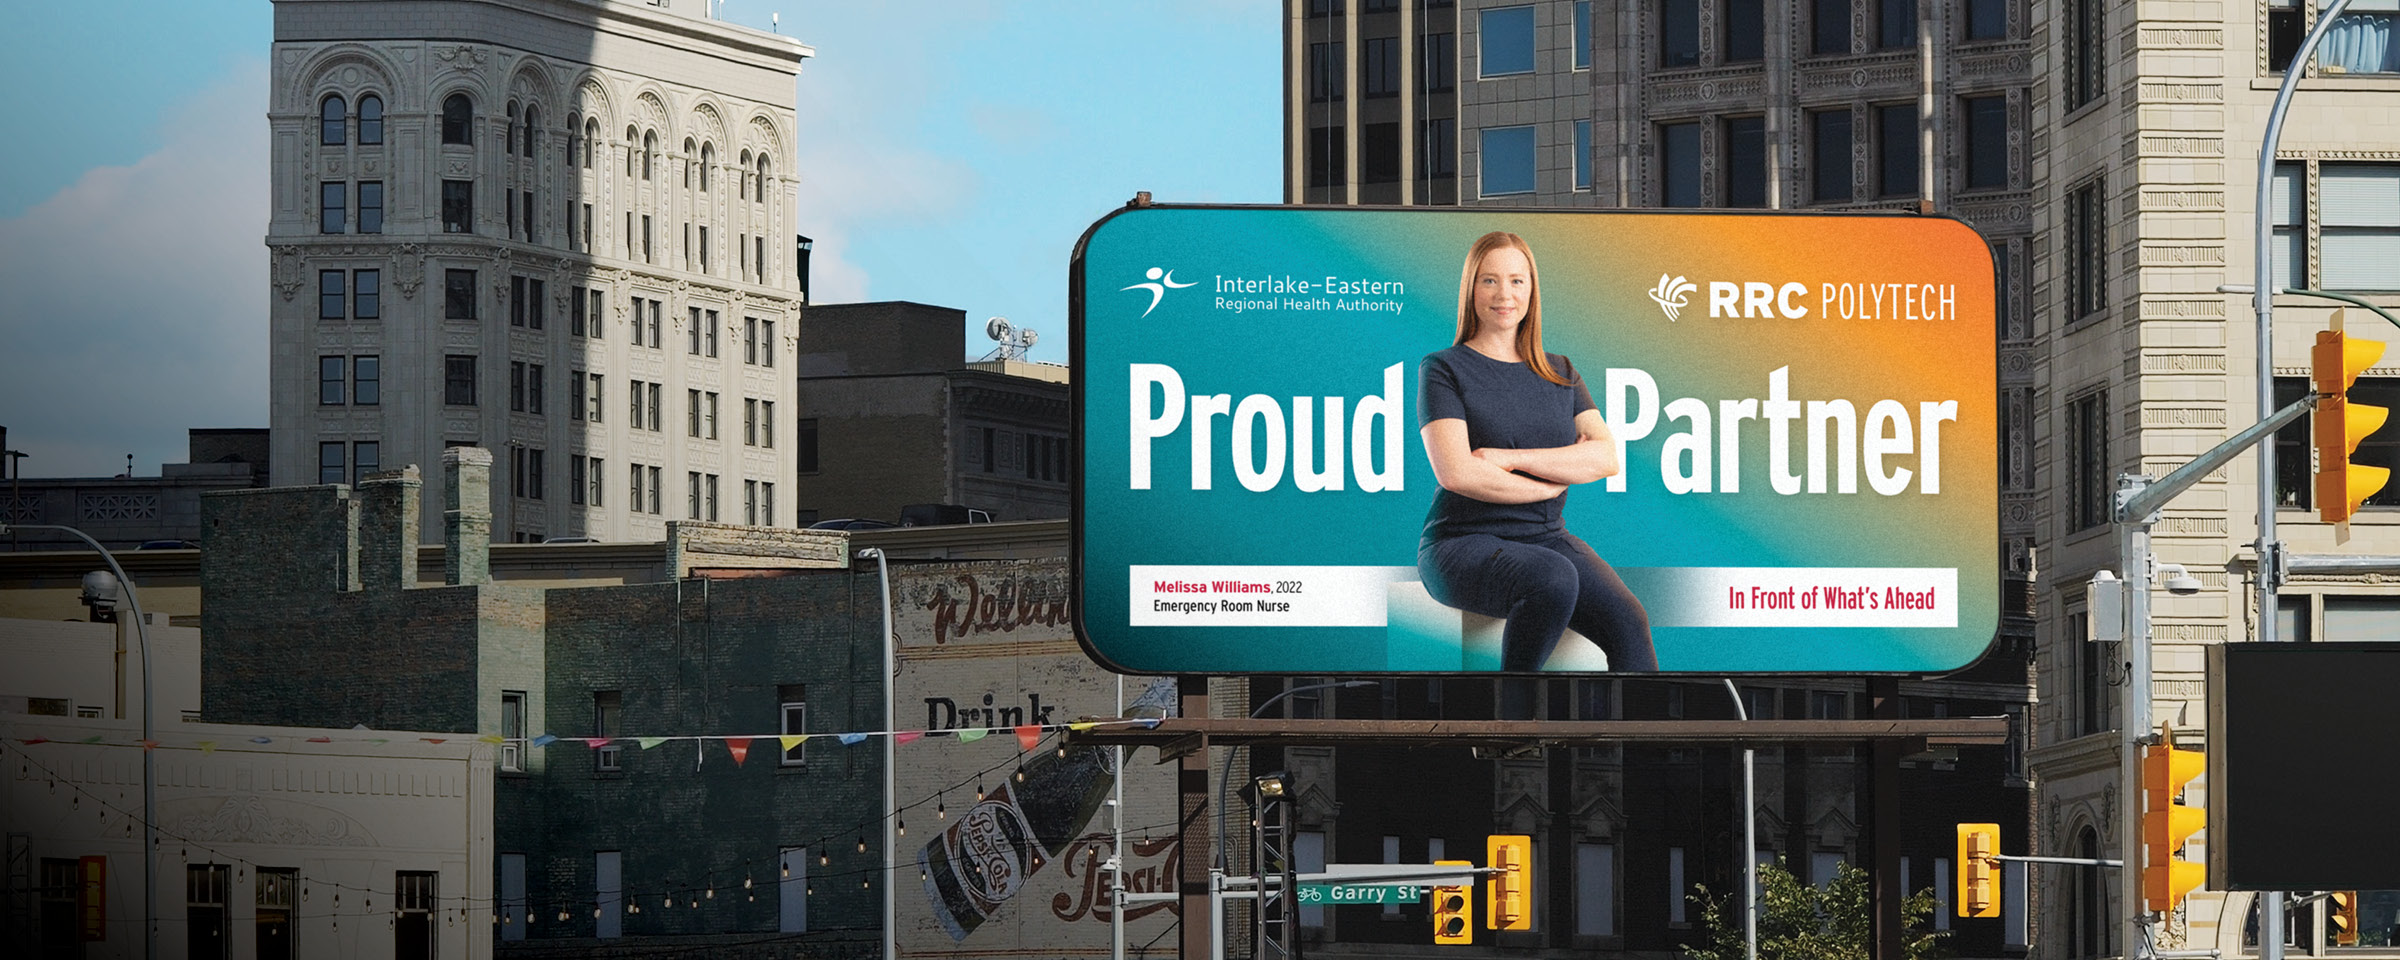 Winnipeg skyline with "Proud Partner" billboard of RRC Polytech graduate Melissa Williams